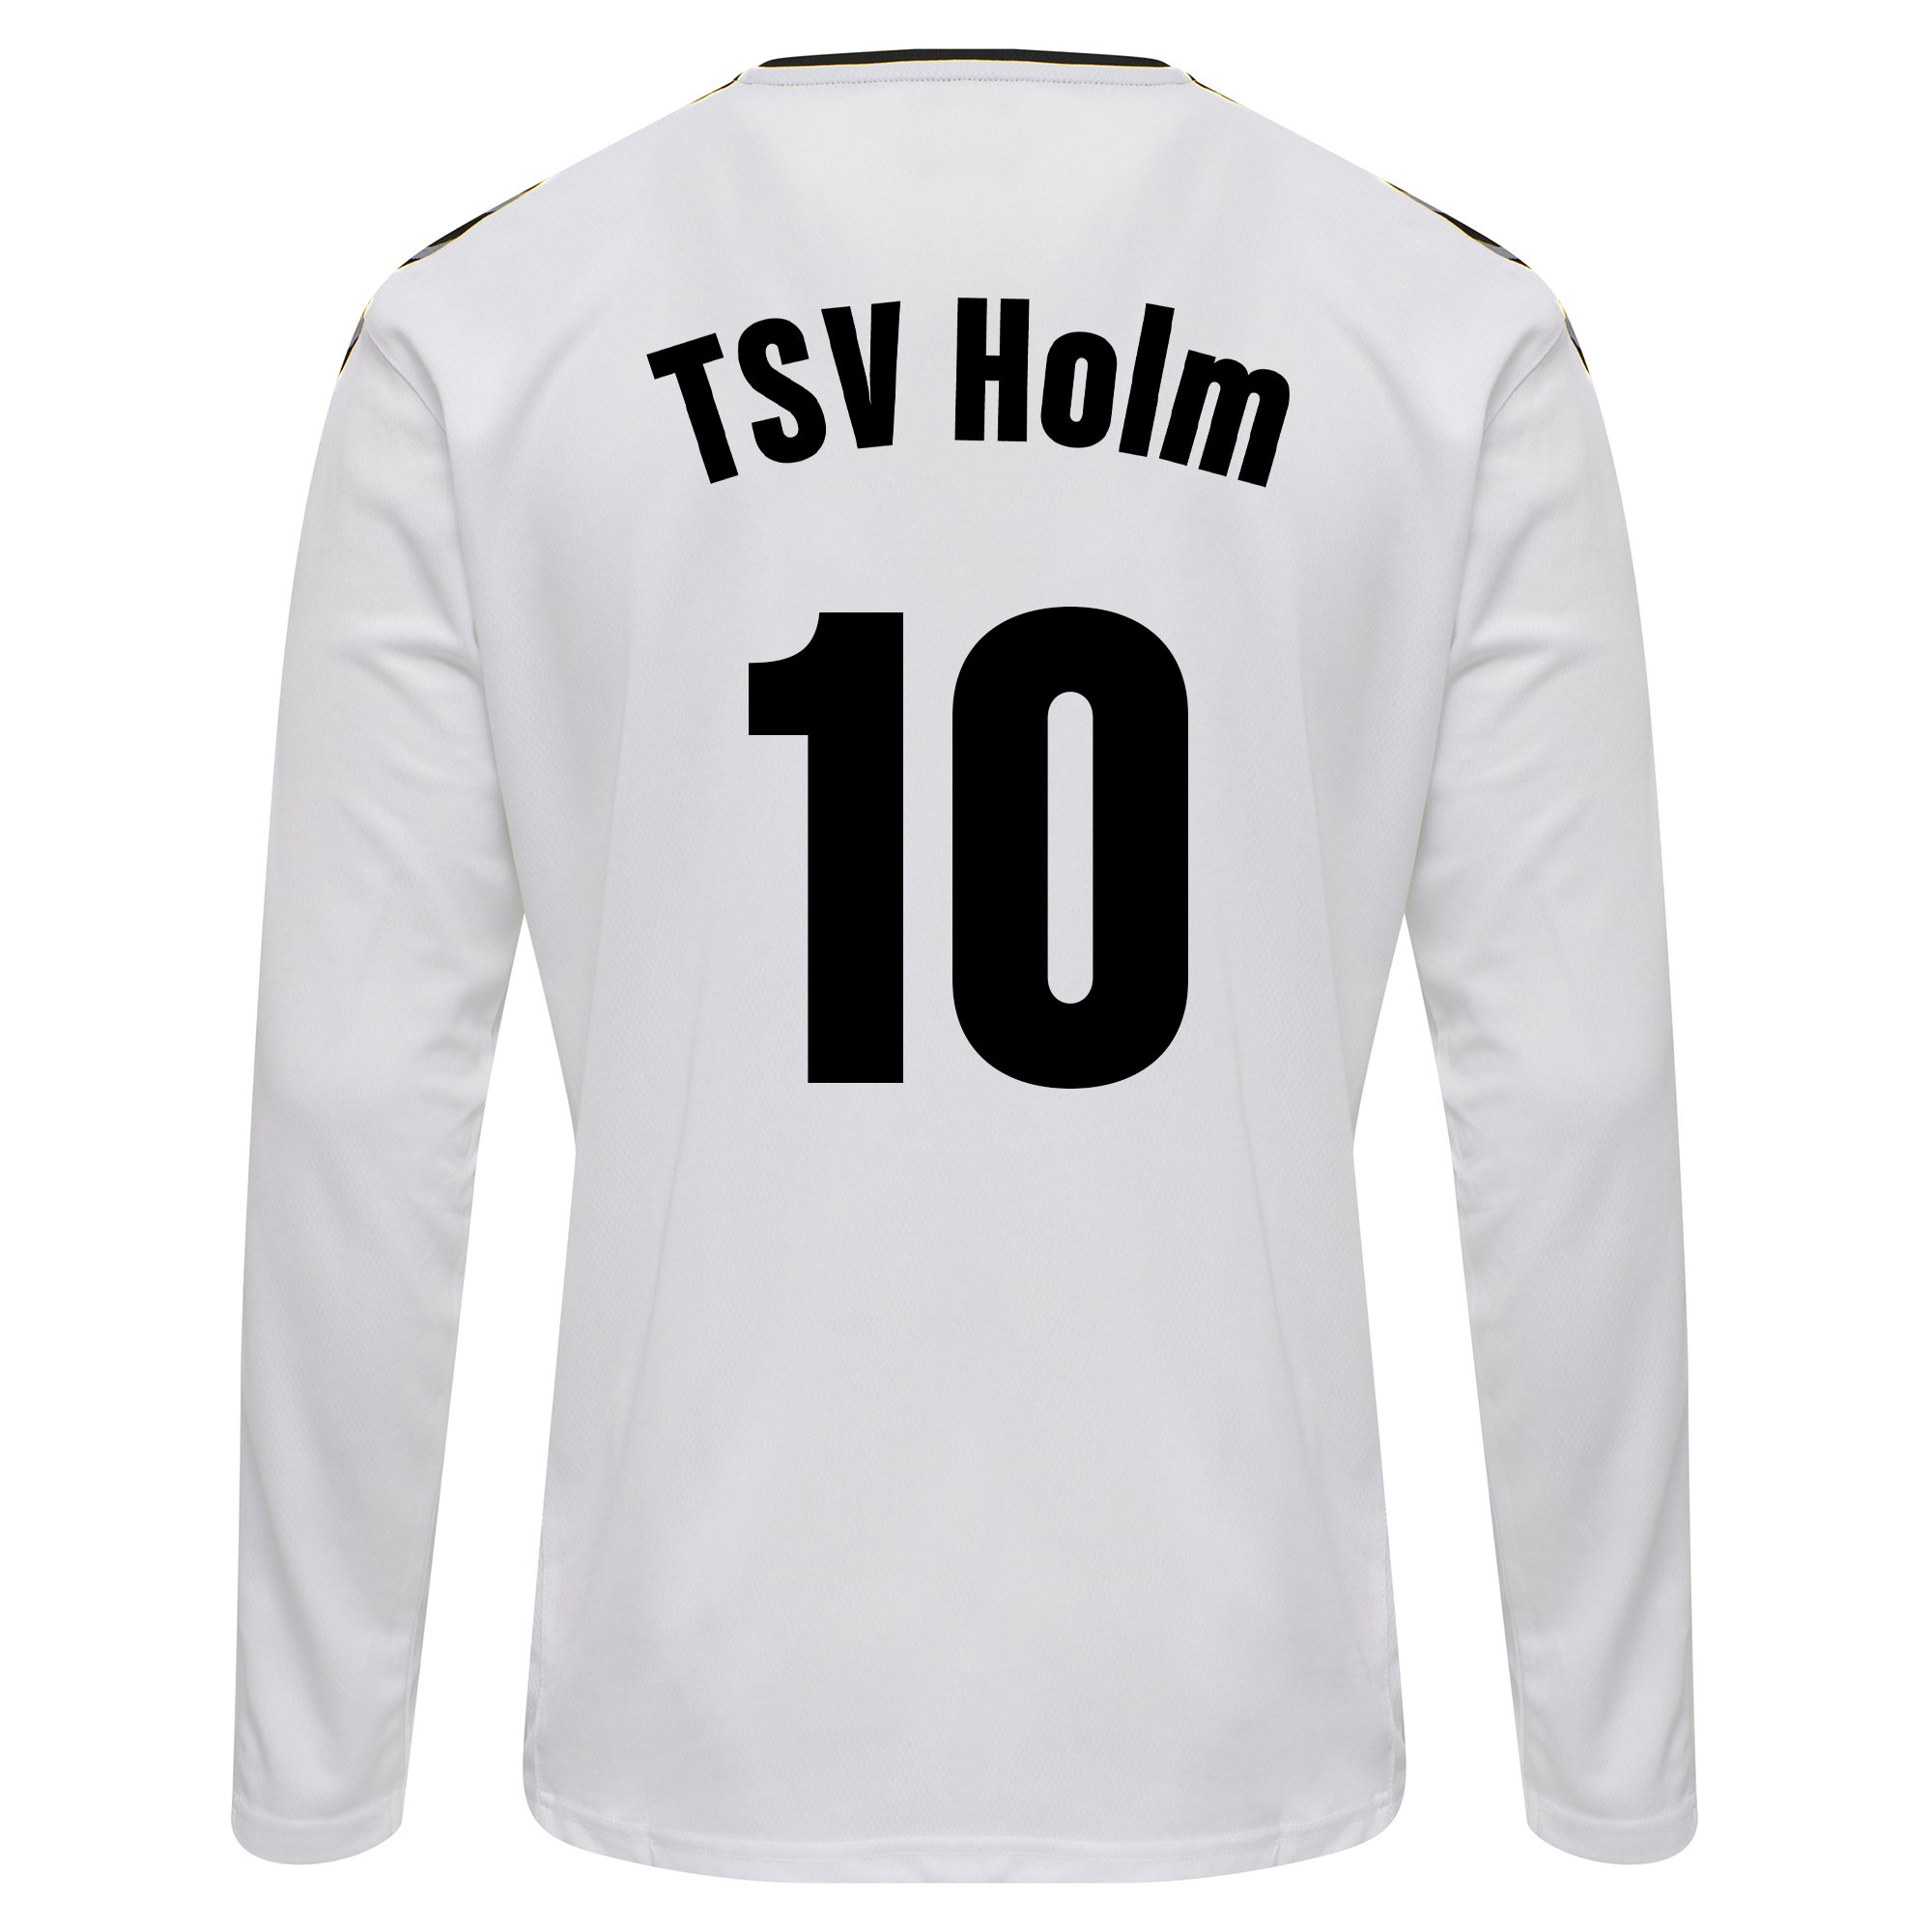 TSV Holm Trikot Langarm